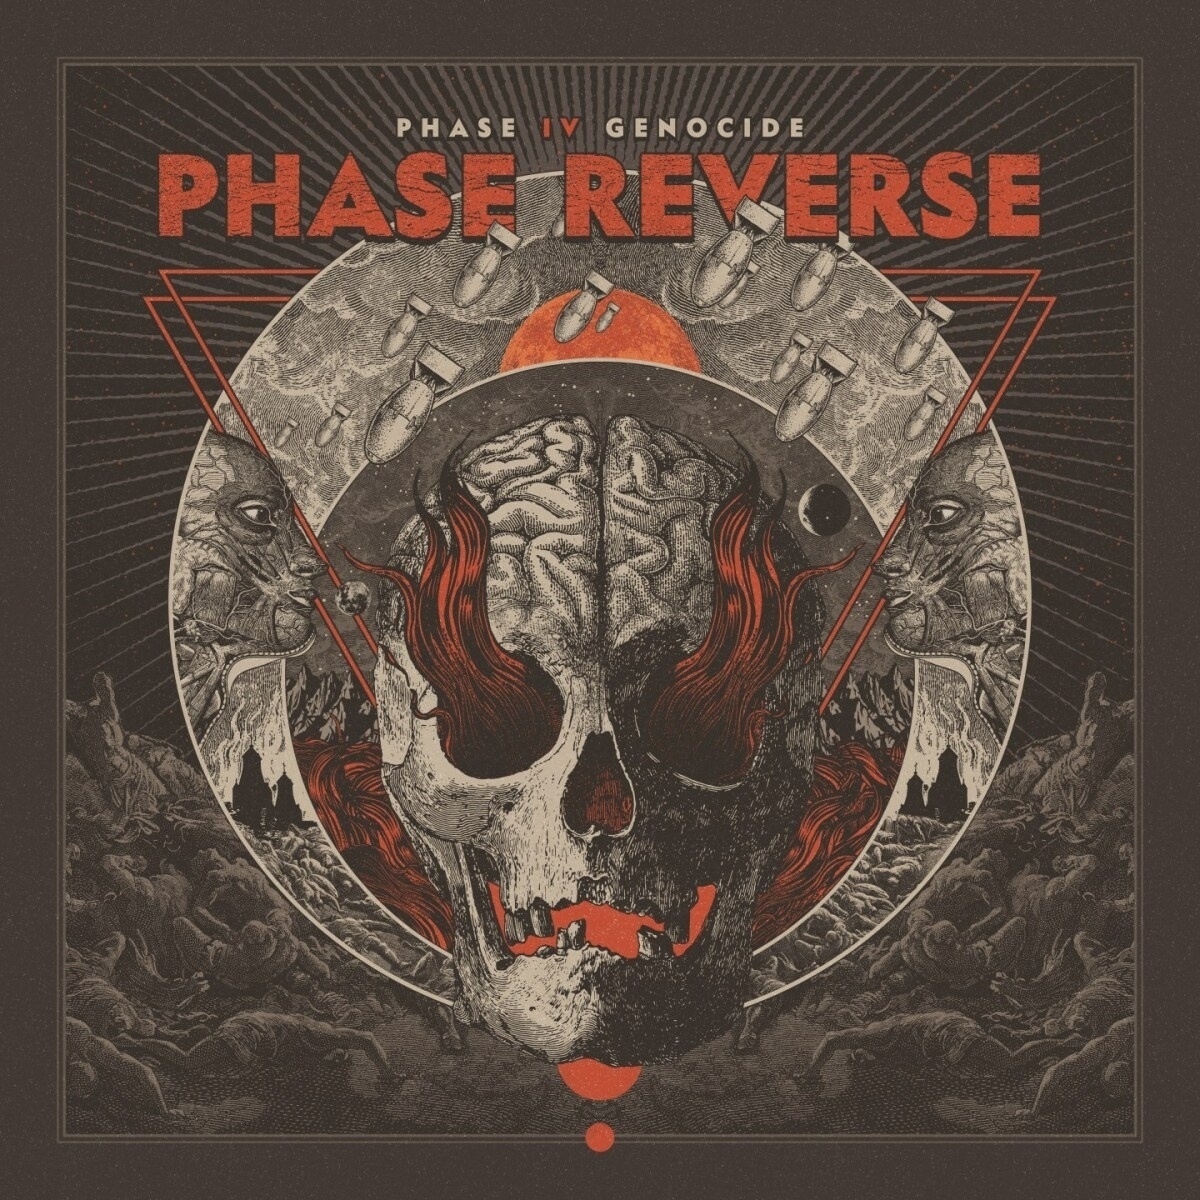 Phase Iv Genocide (Digipak) - Phase Reverse. (CD)